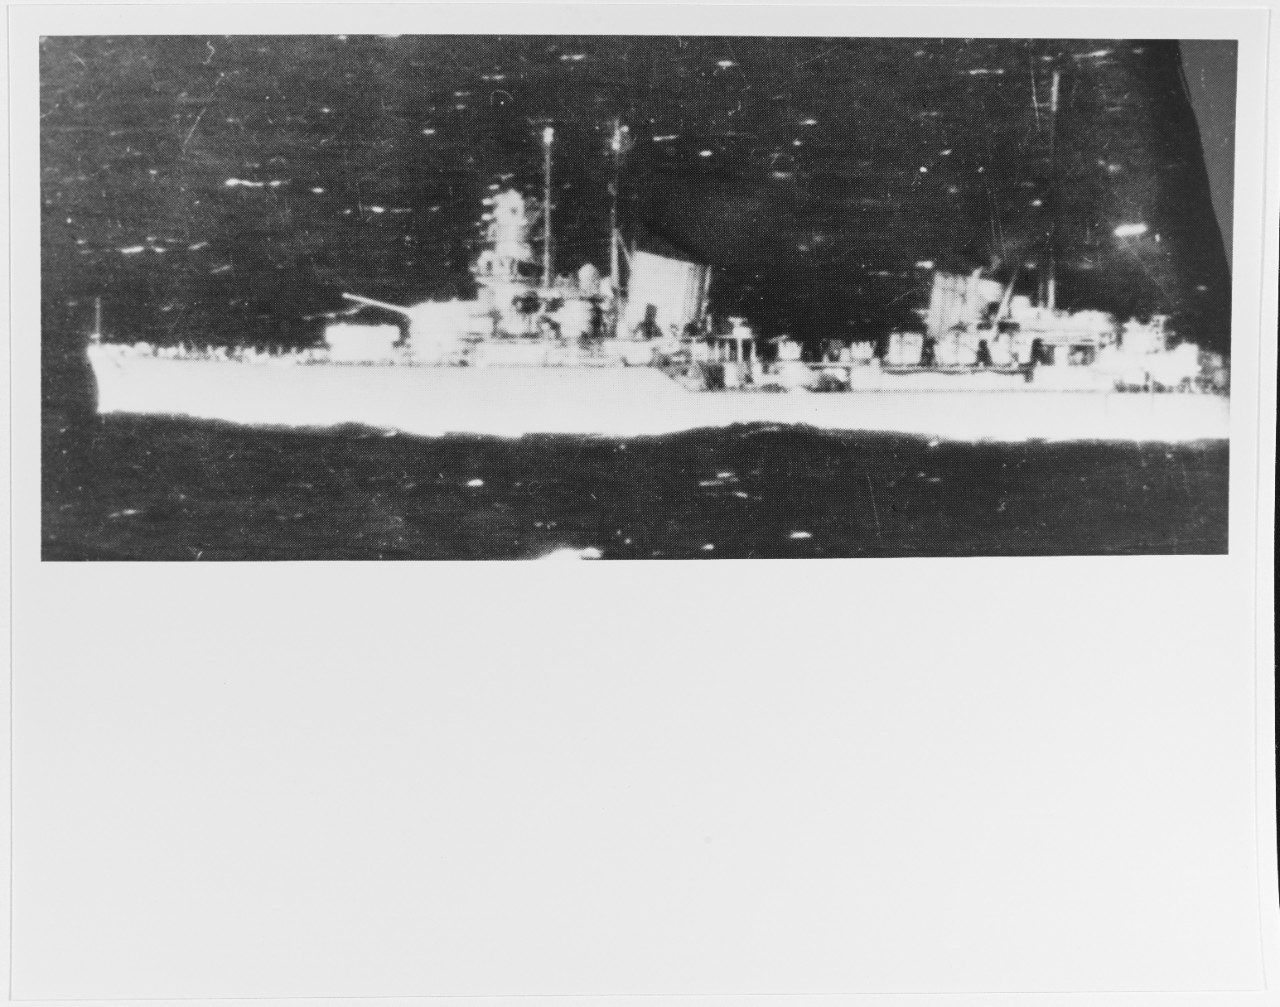 Soviet KIROV class cruiser at sea, circa 1955-1960